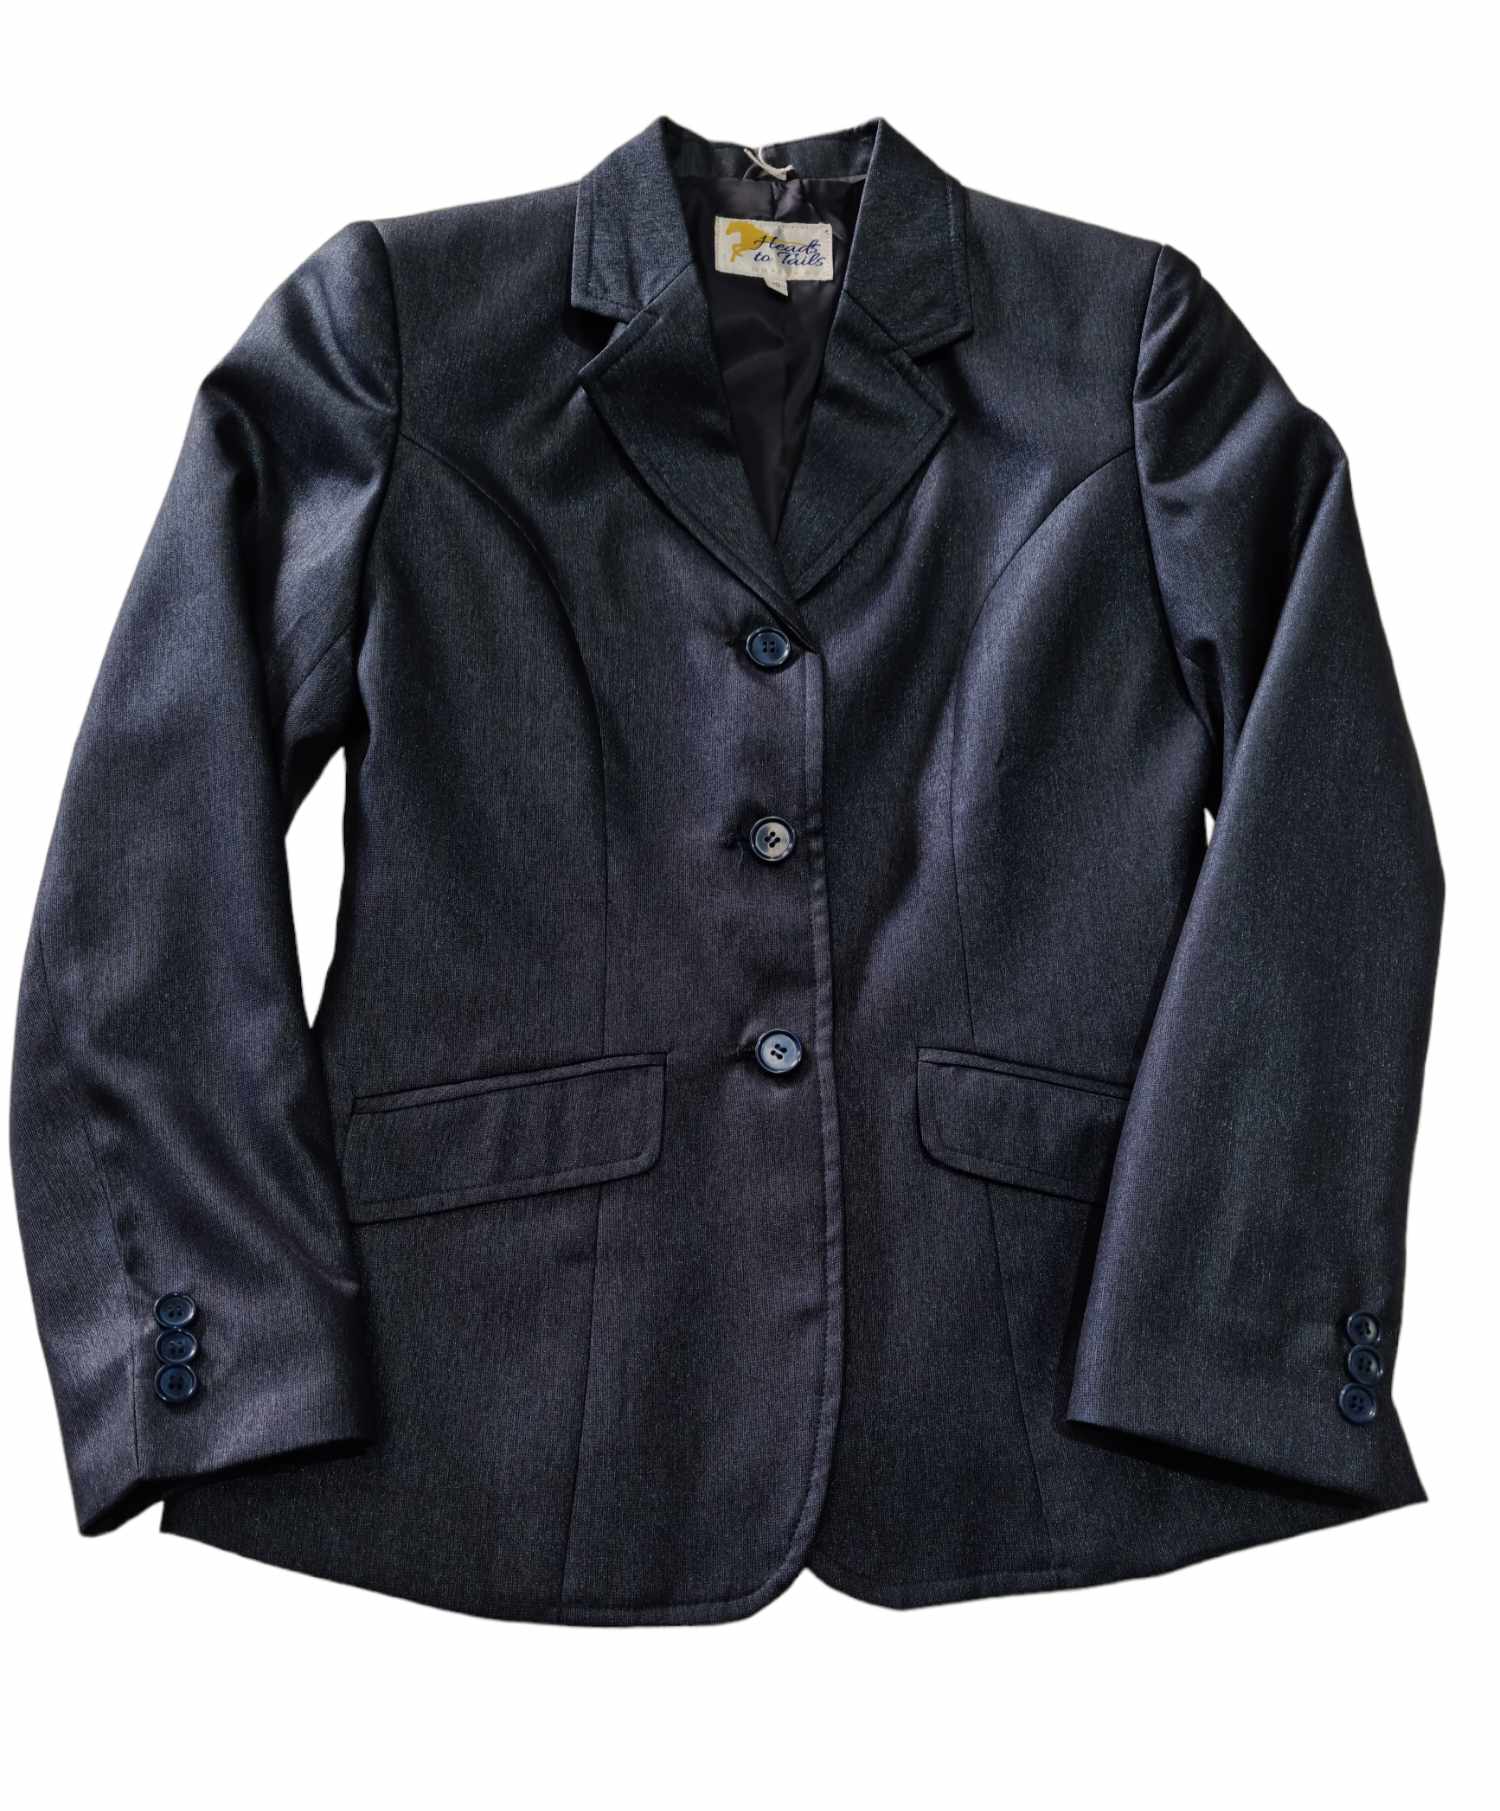 Ladies Shiny Navy Show Jacket – Size 10